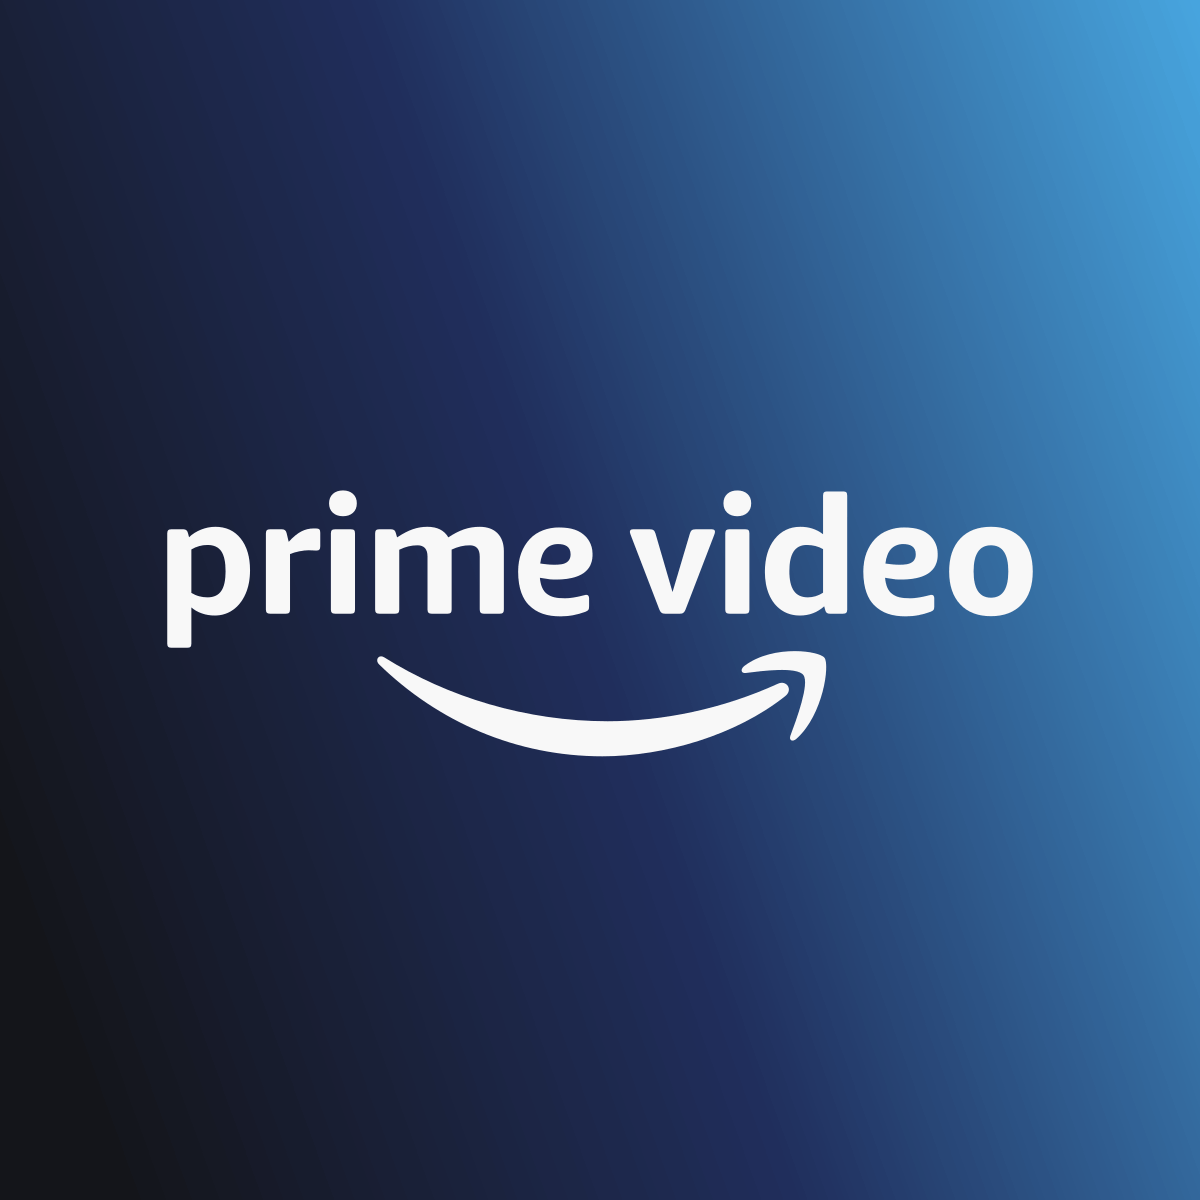 Figure 1: Prime Video logo.